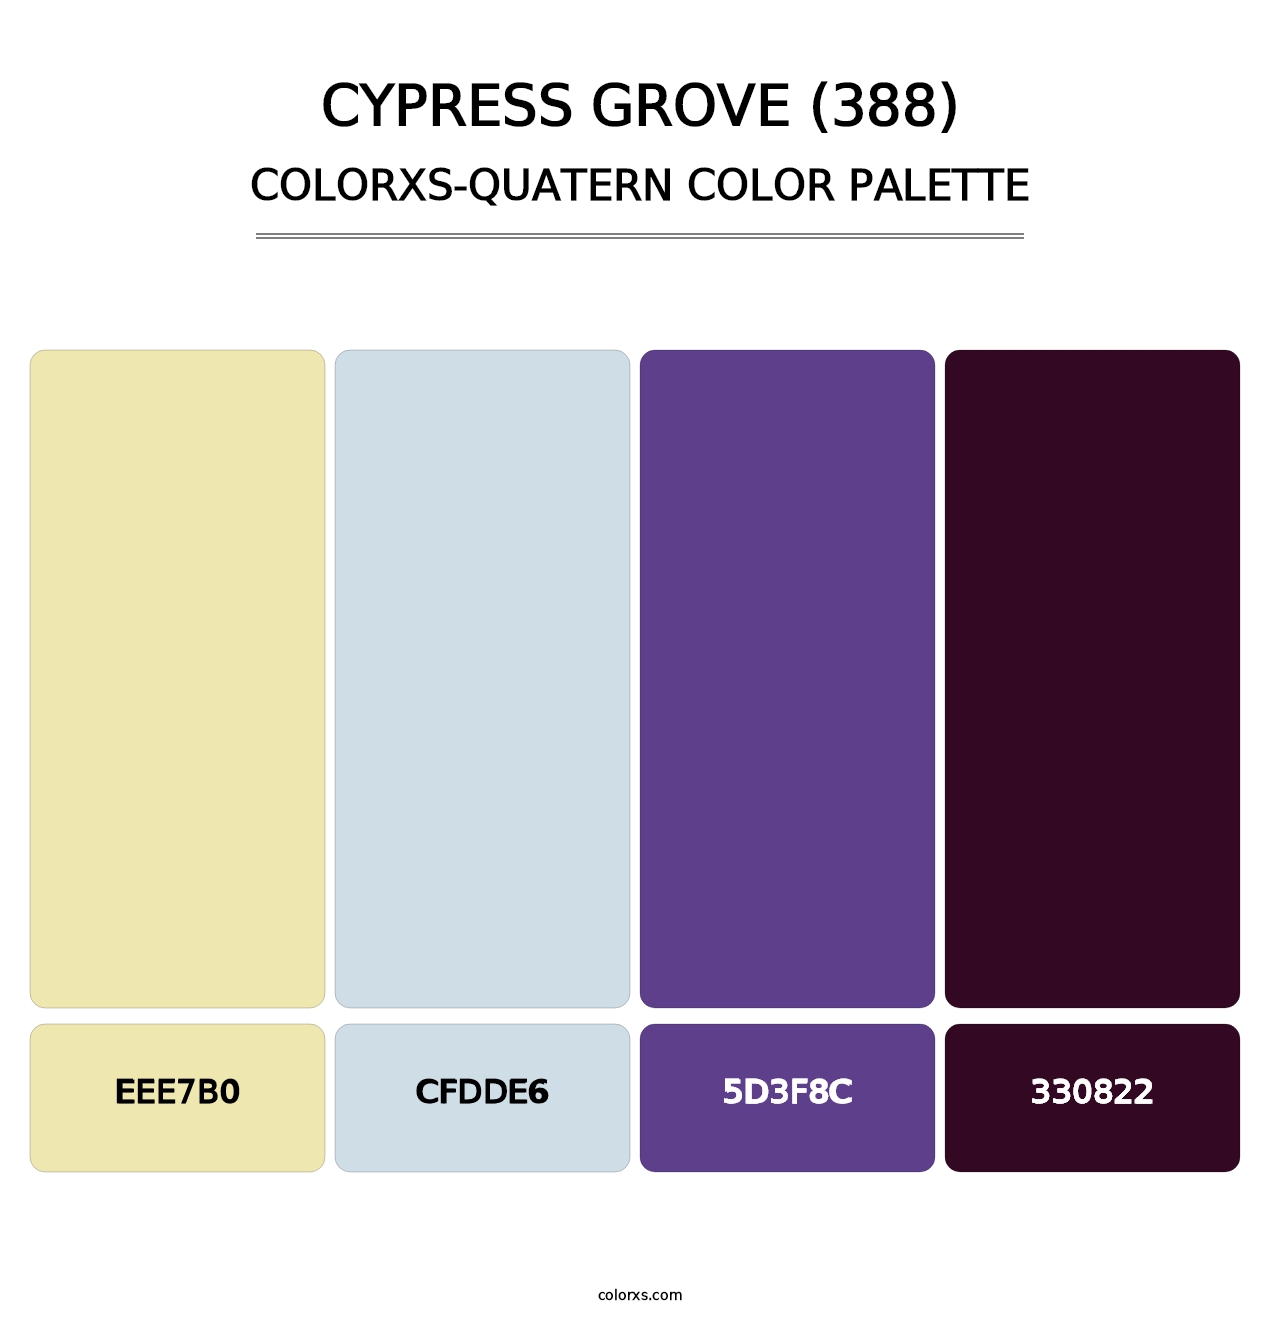 Cypress Grove (388) - Colorxs Quatern Palette